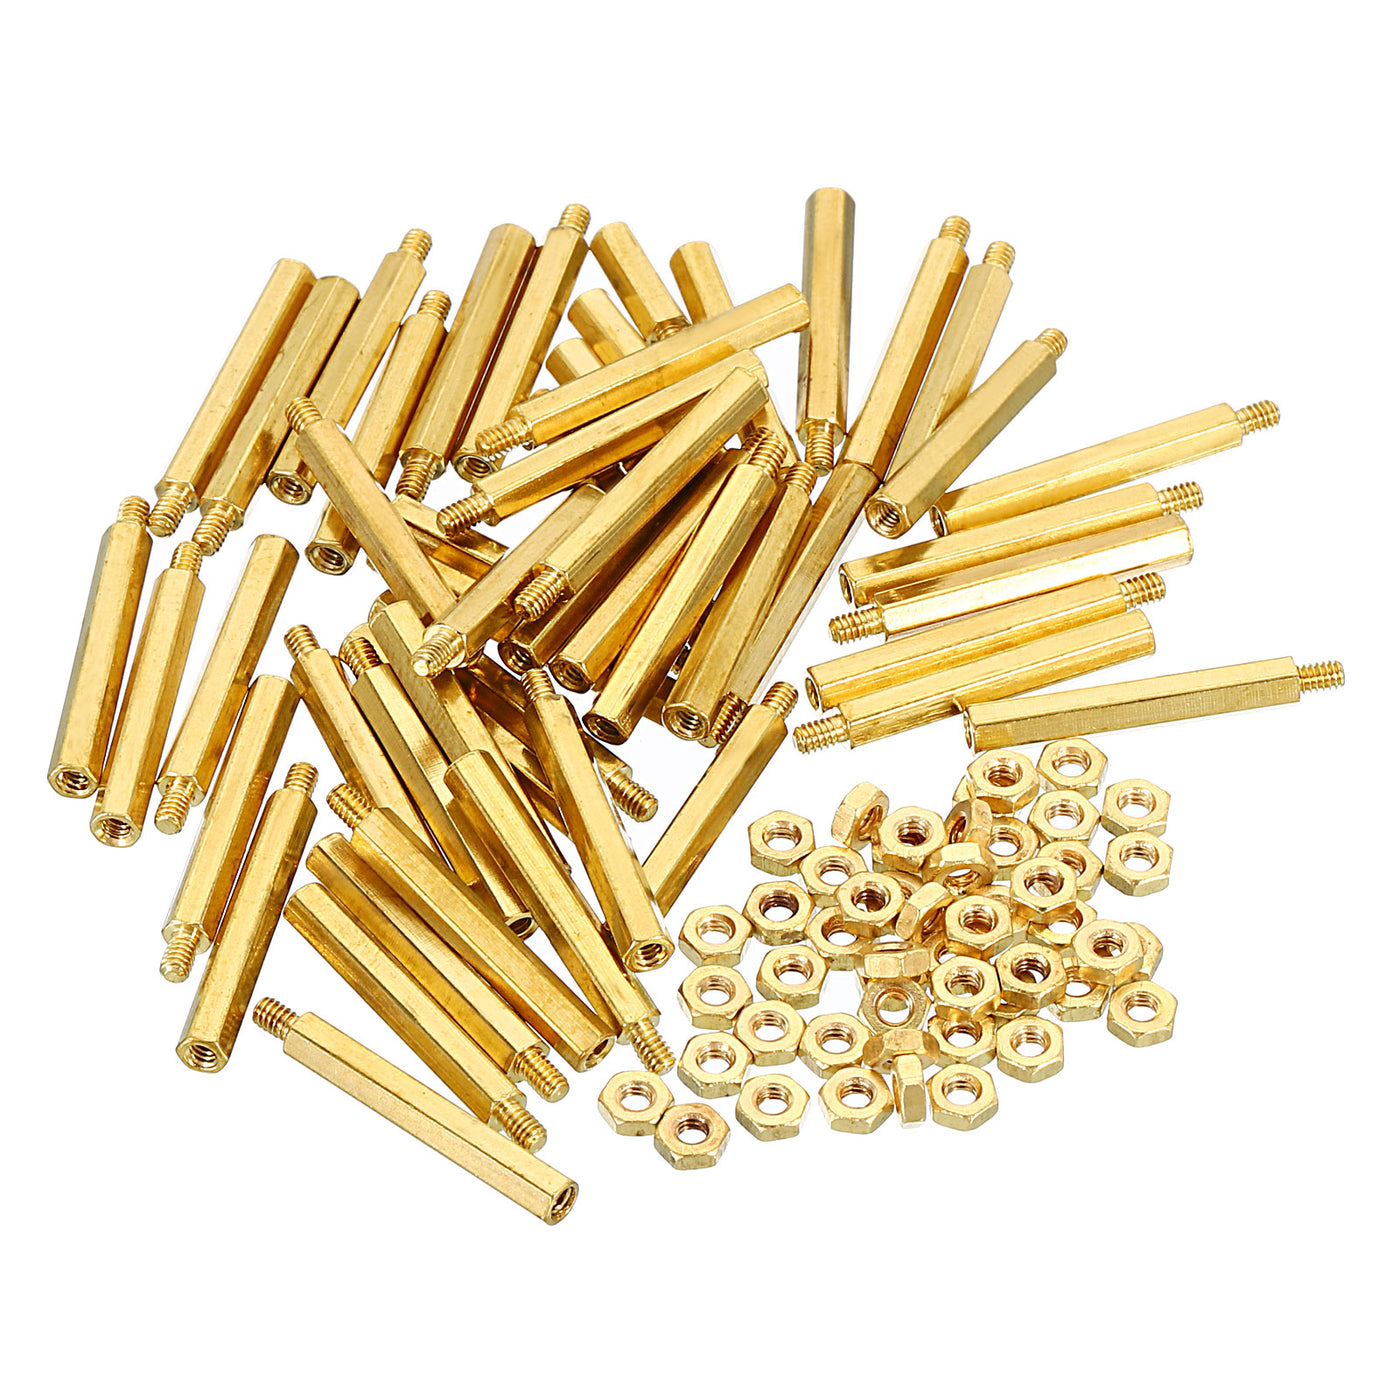 Harfington 20mm+3mm M2 Standoff Screws 100 Pack Brass Hex PCB Standoffs Nuts Gold Tone